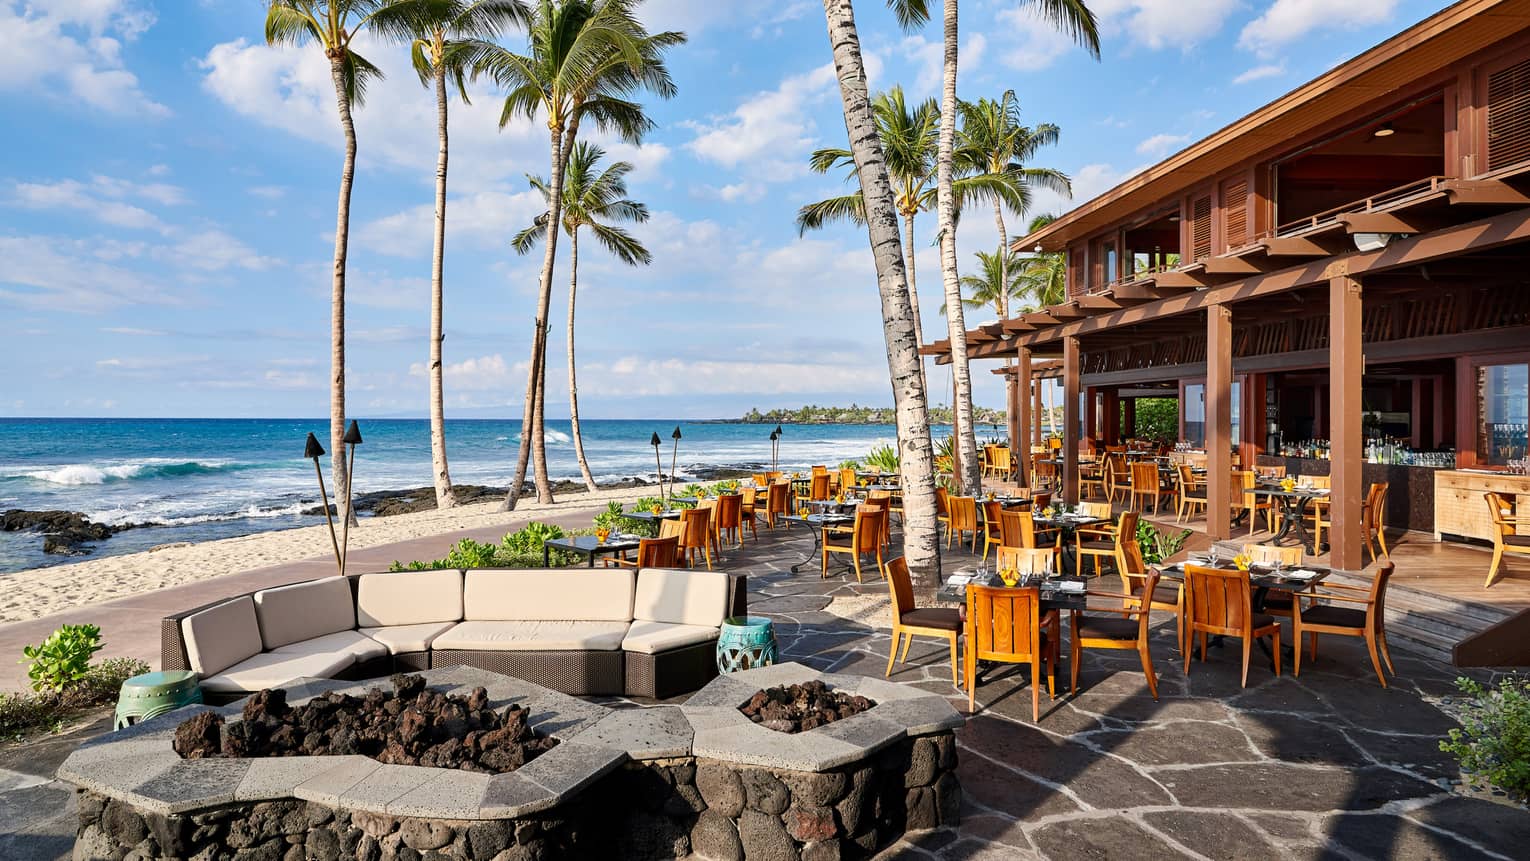 ULU Ocean Grill sunny patio dining room under palm trees, near beach 